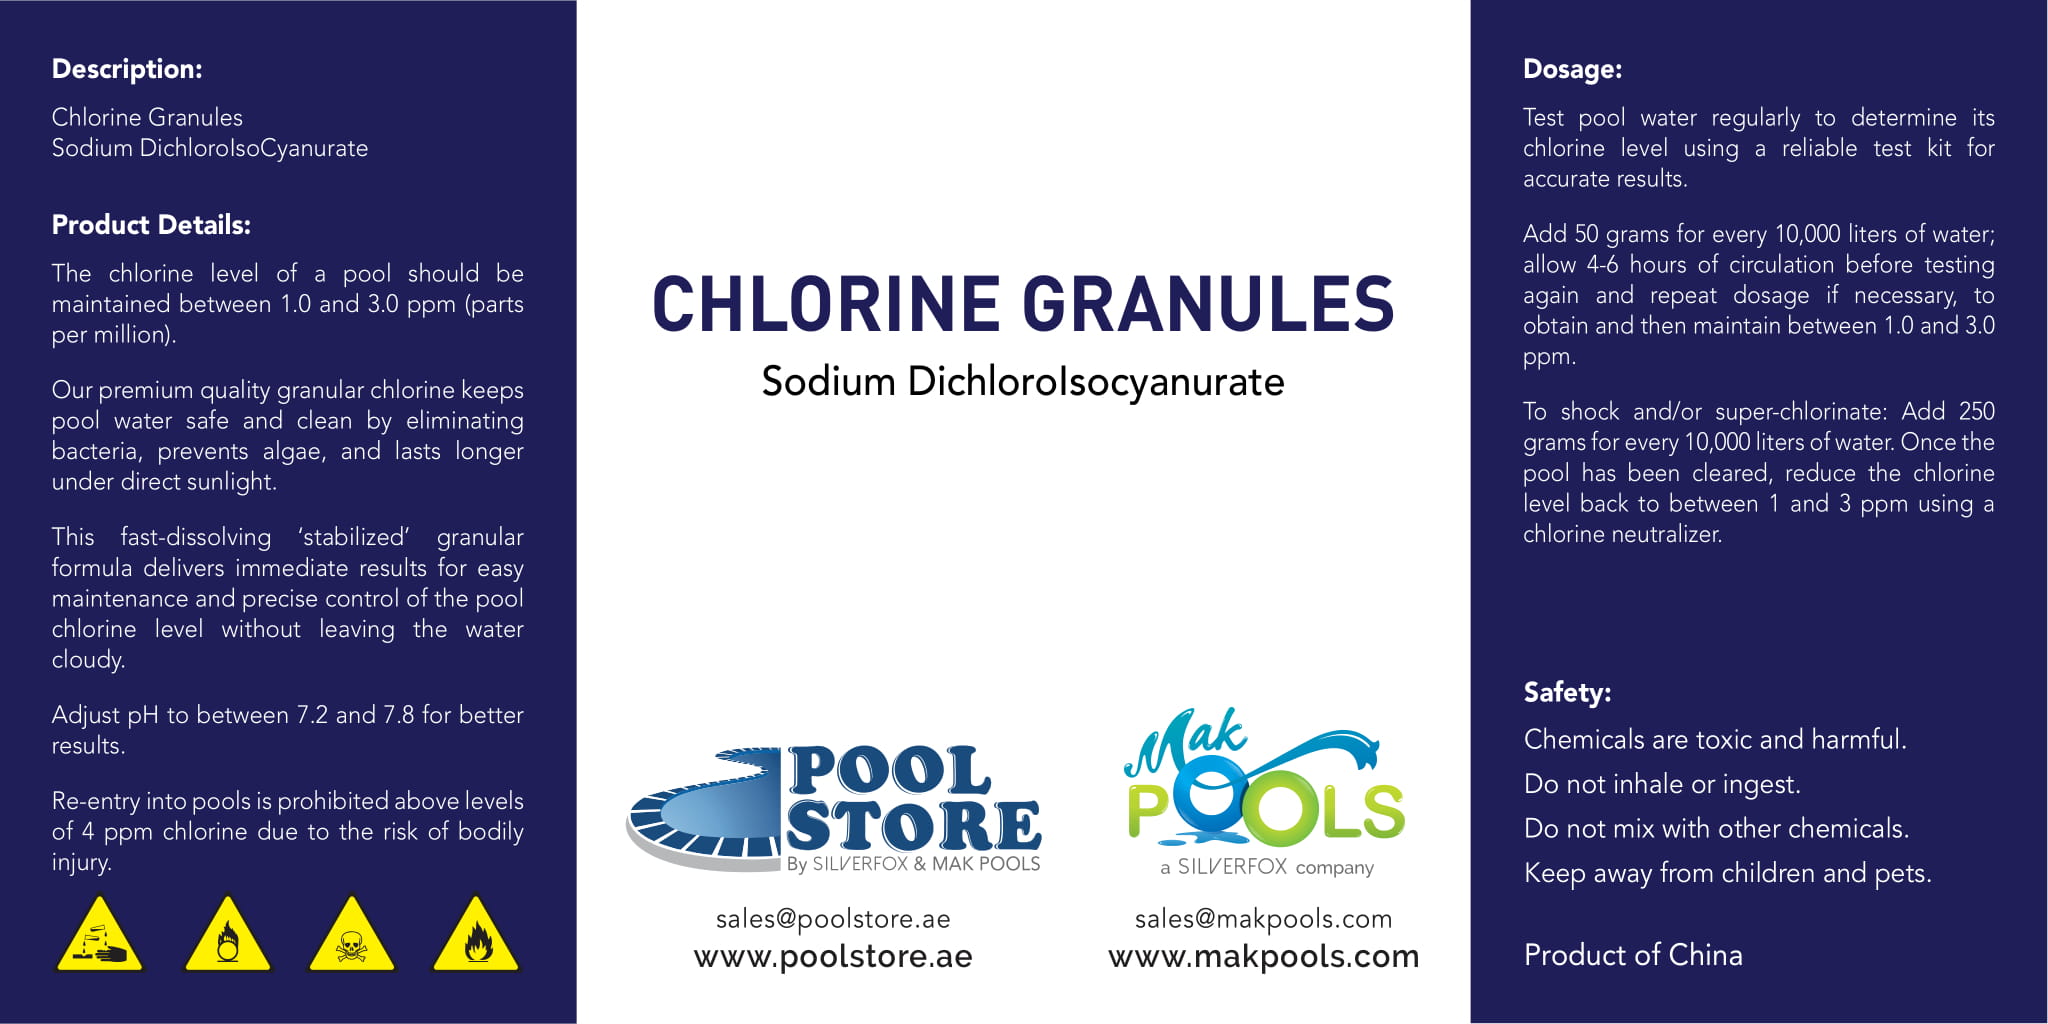 Chlorine Granules 2kgs - SDIC